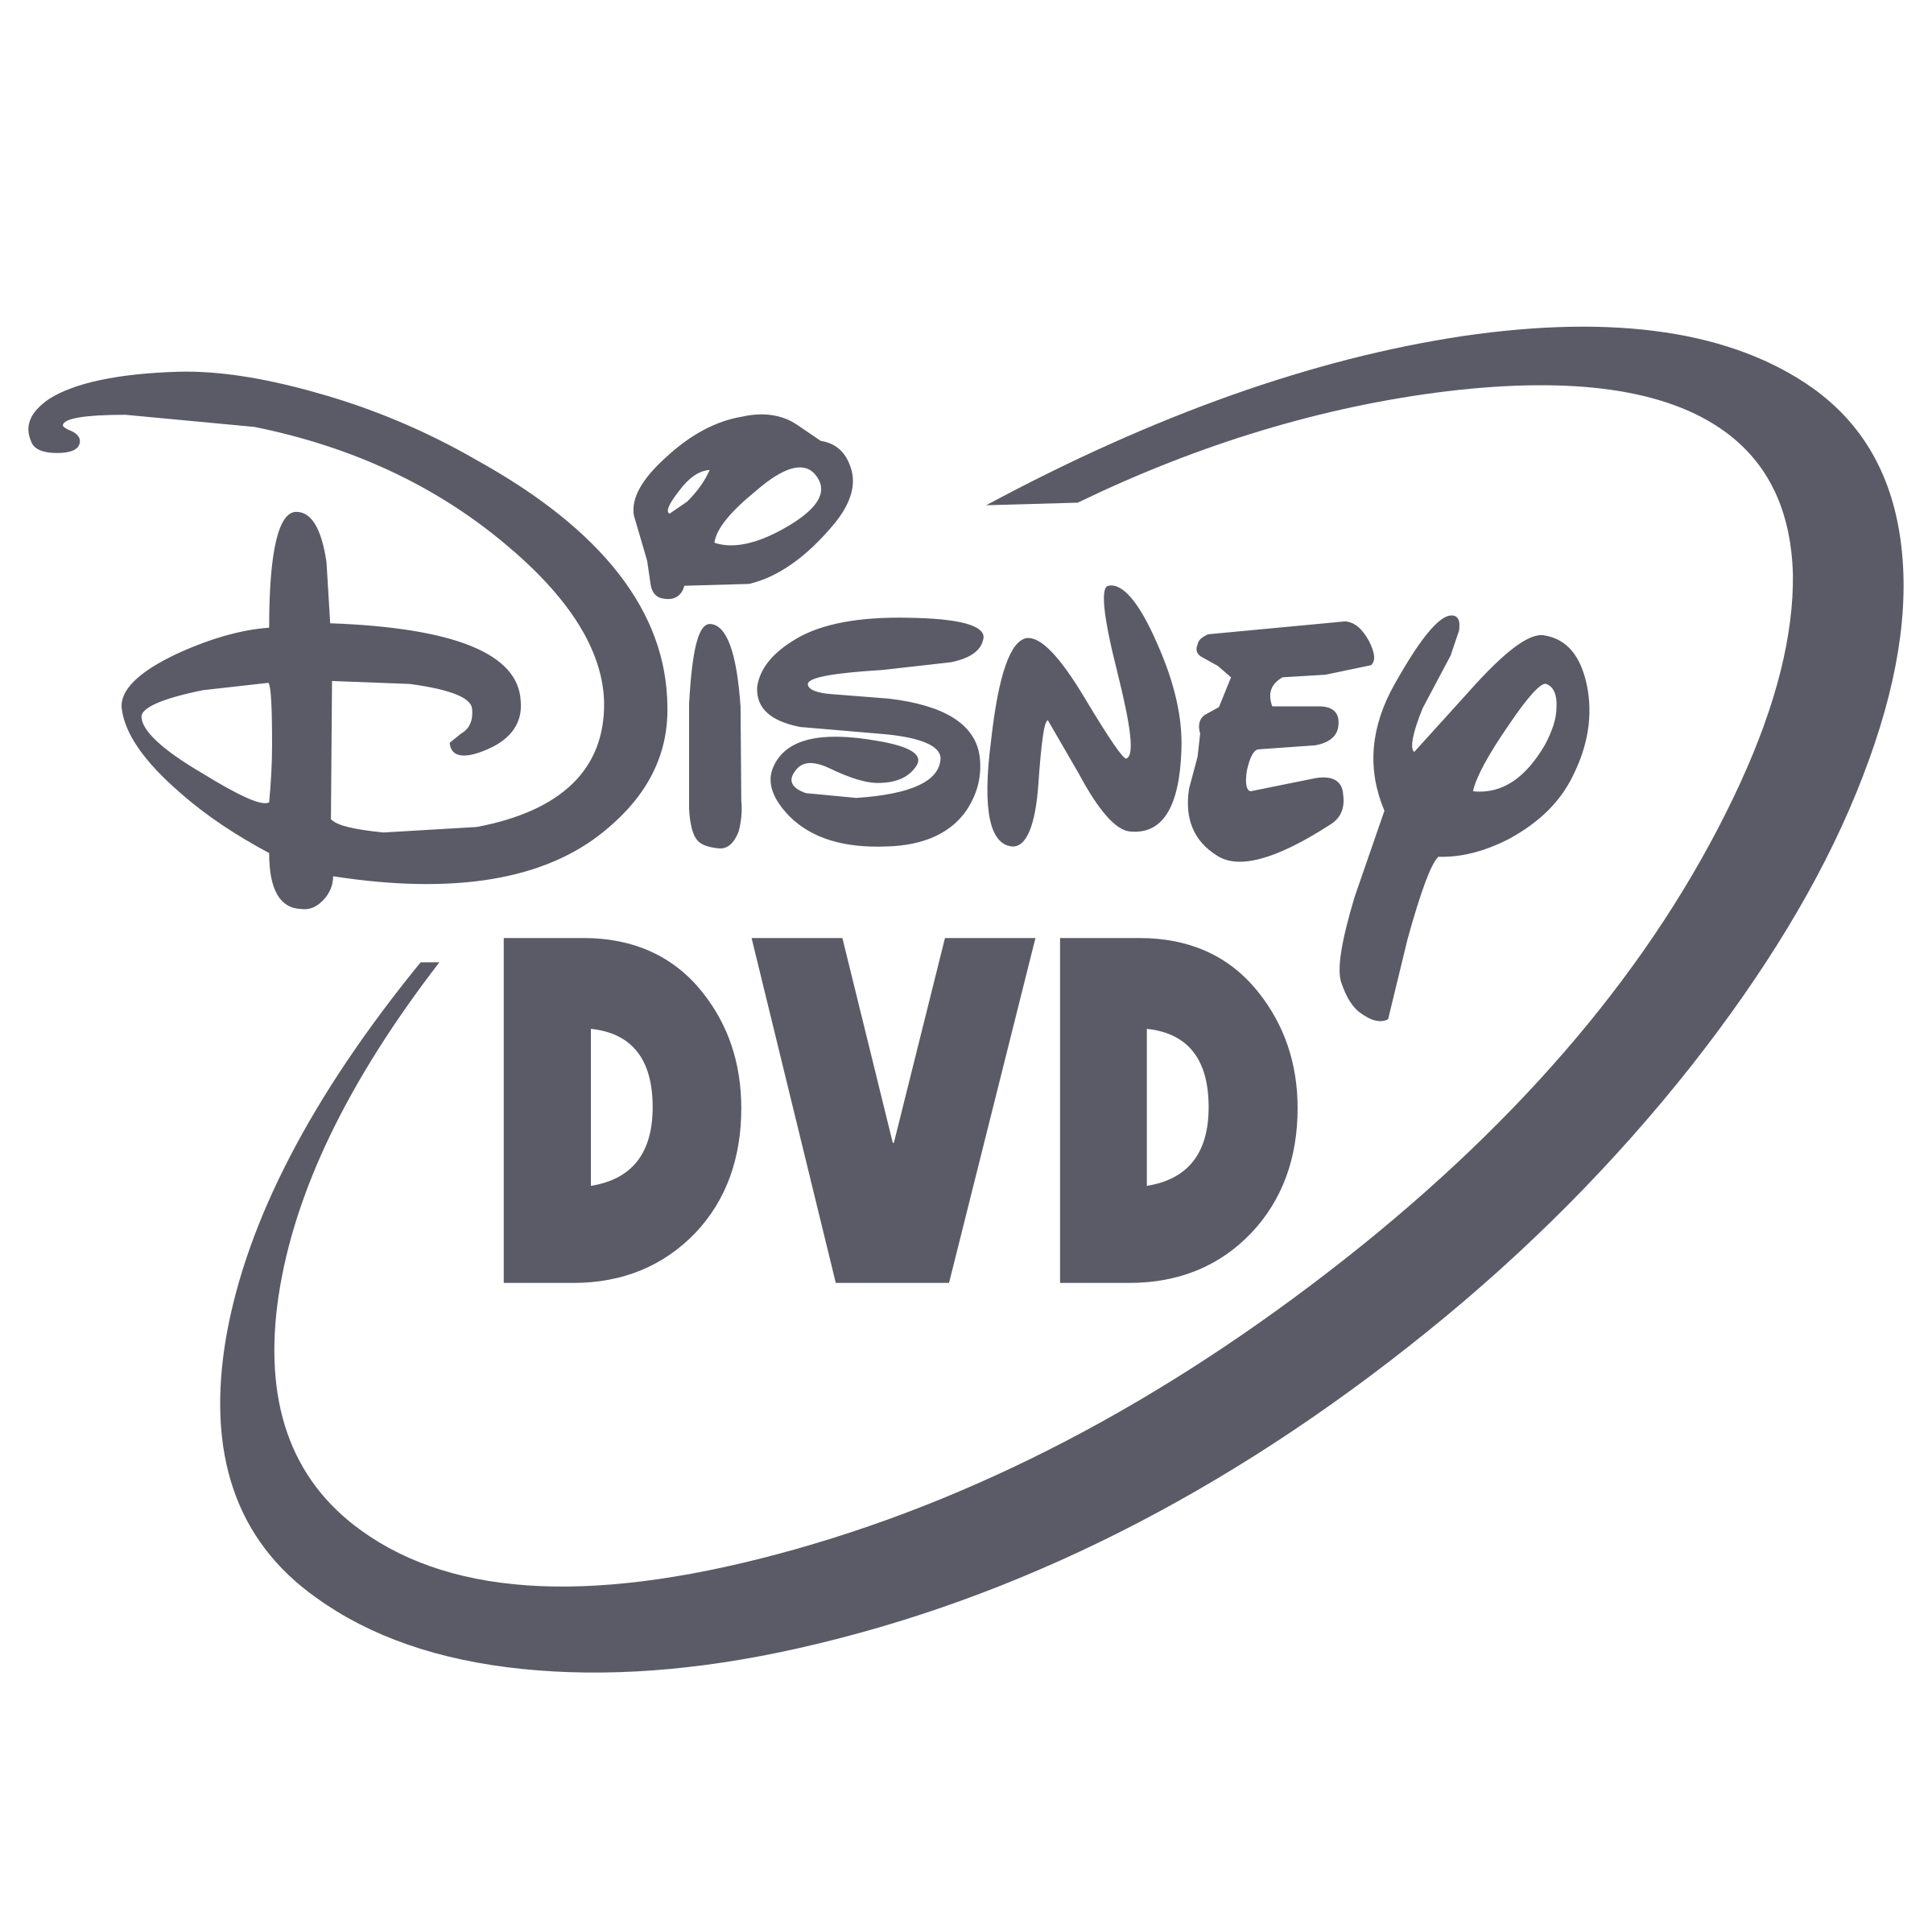 DVD Logo - Disney DVD Logo PNG Transparent & SVG Vector - Freebie Supply